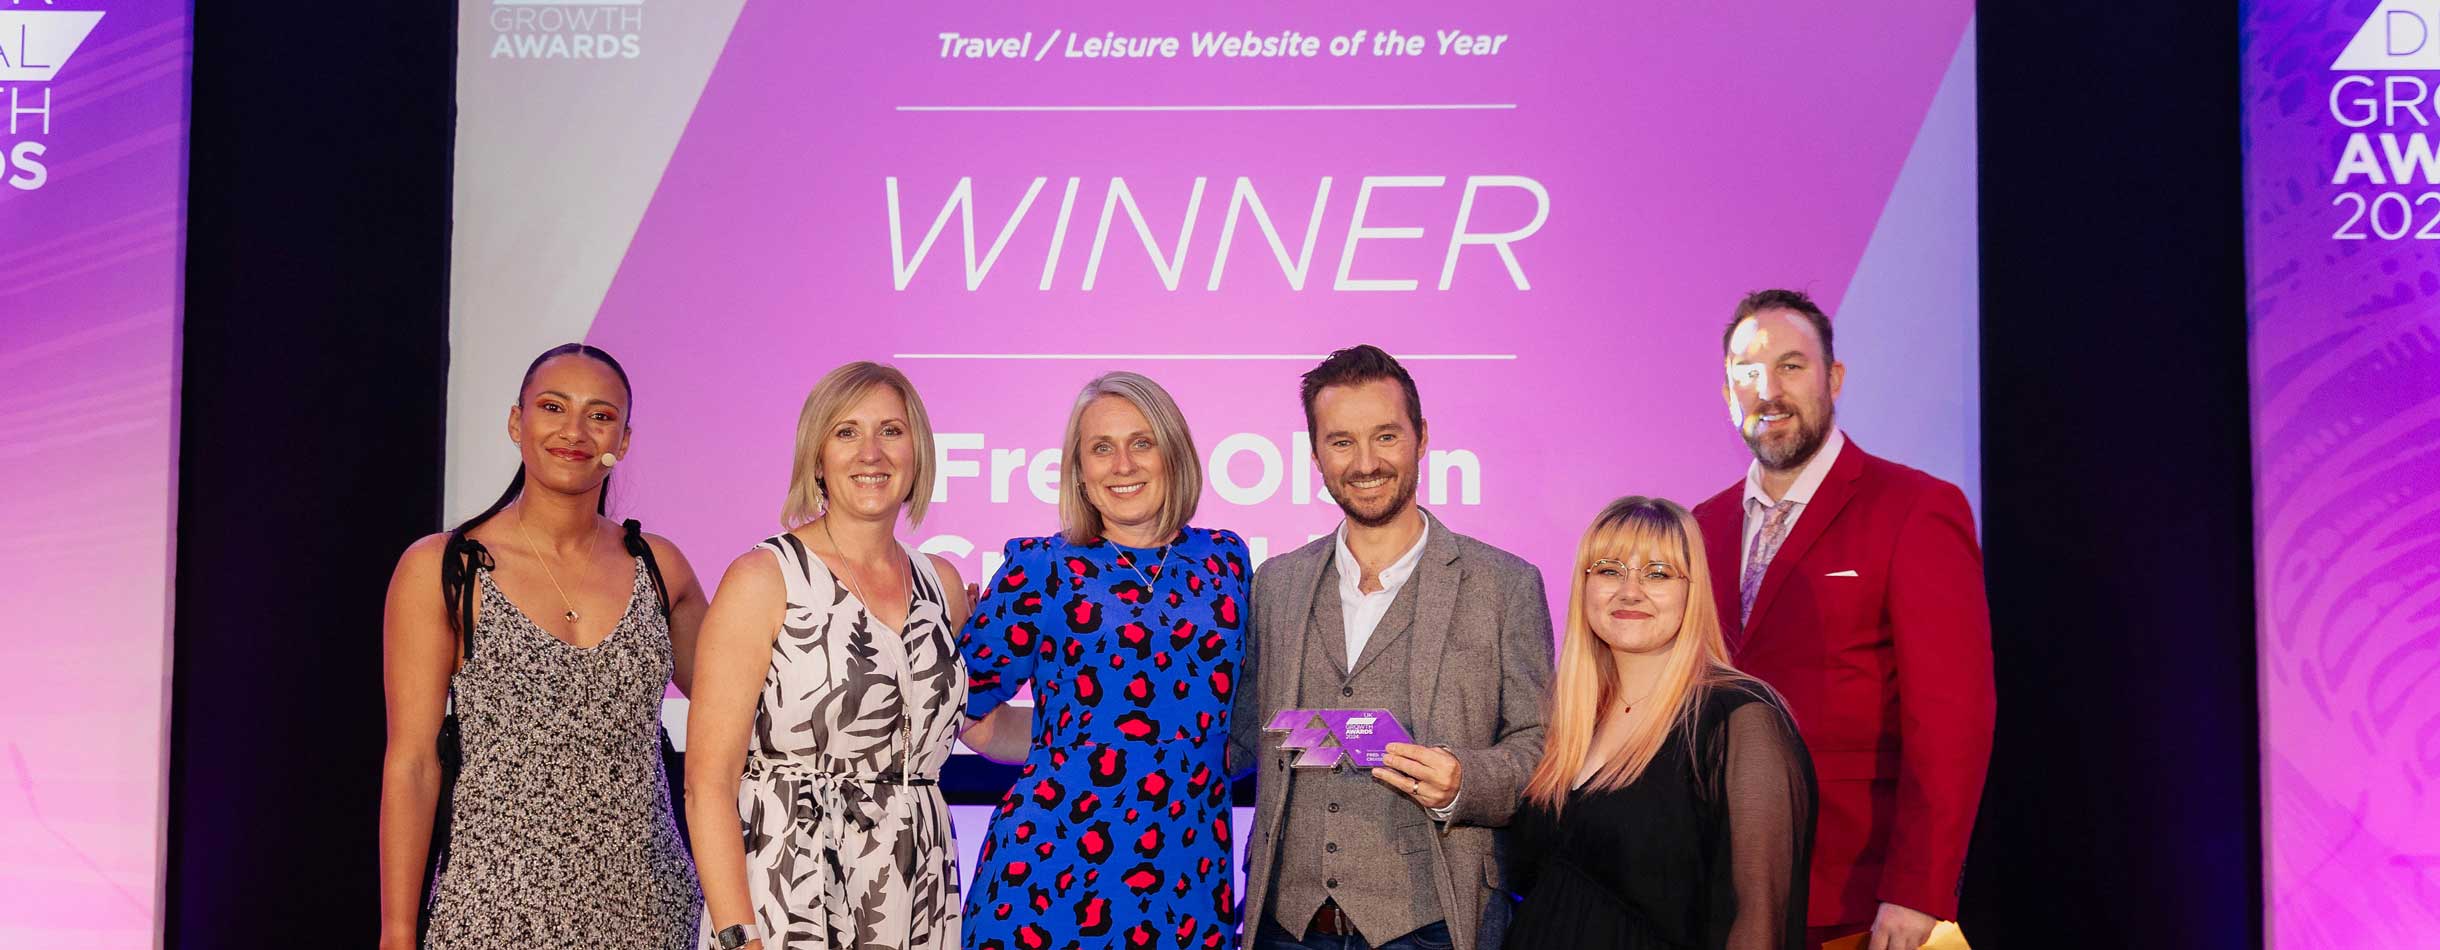 Fred. Olsen Digital Team receiving the Award for Best Travel Website of the Year